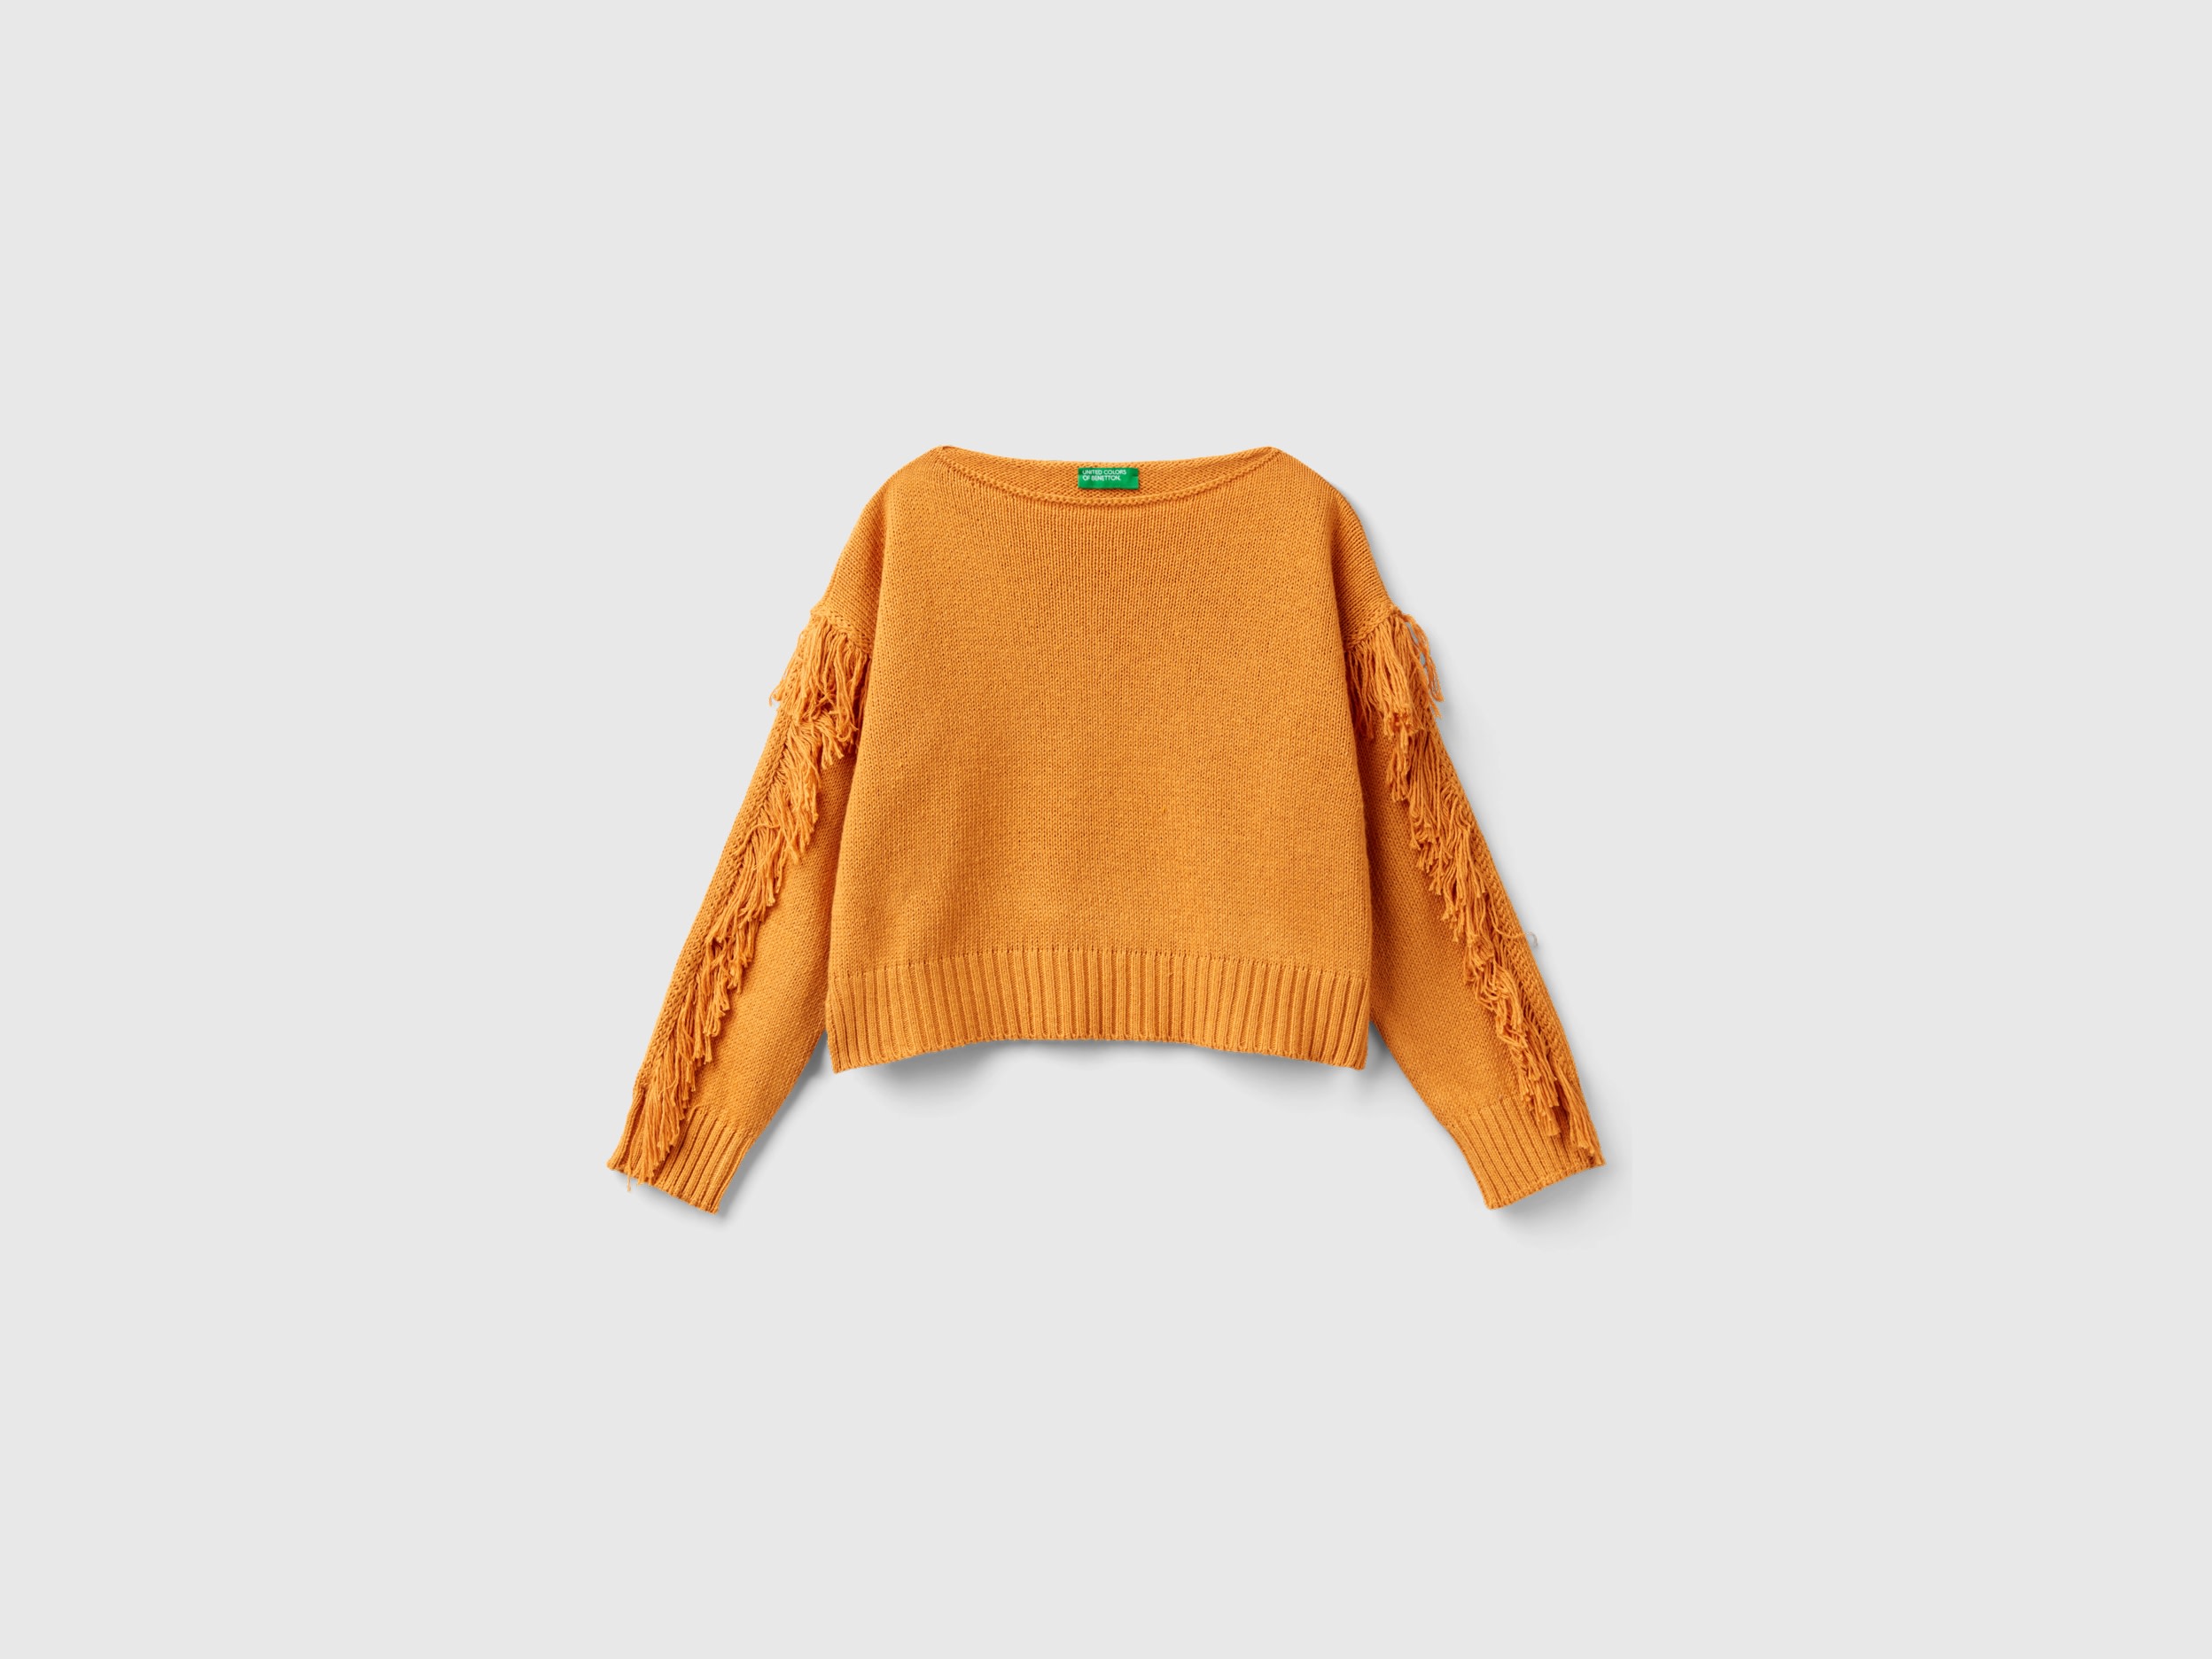 Image of Benetton, Sweater With Fringe, size M, Camel, Kids